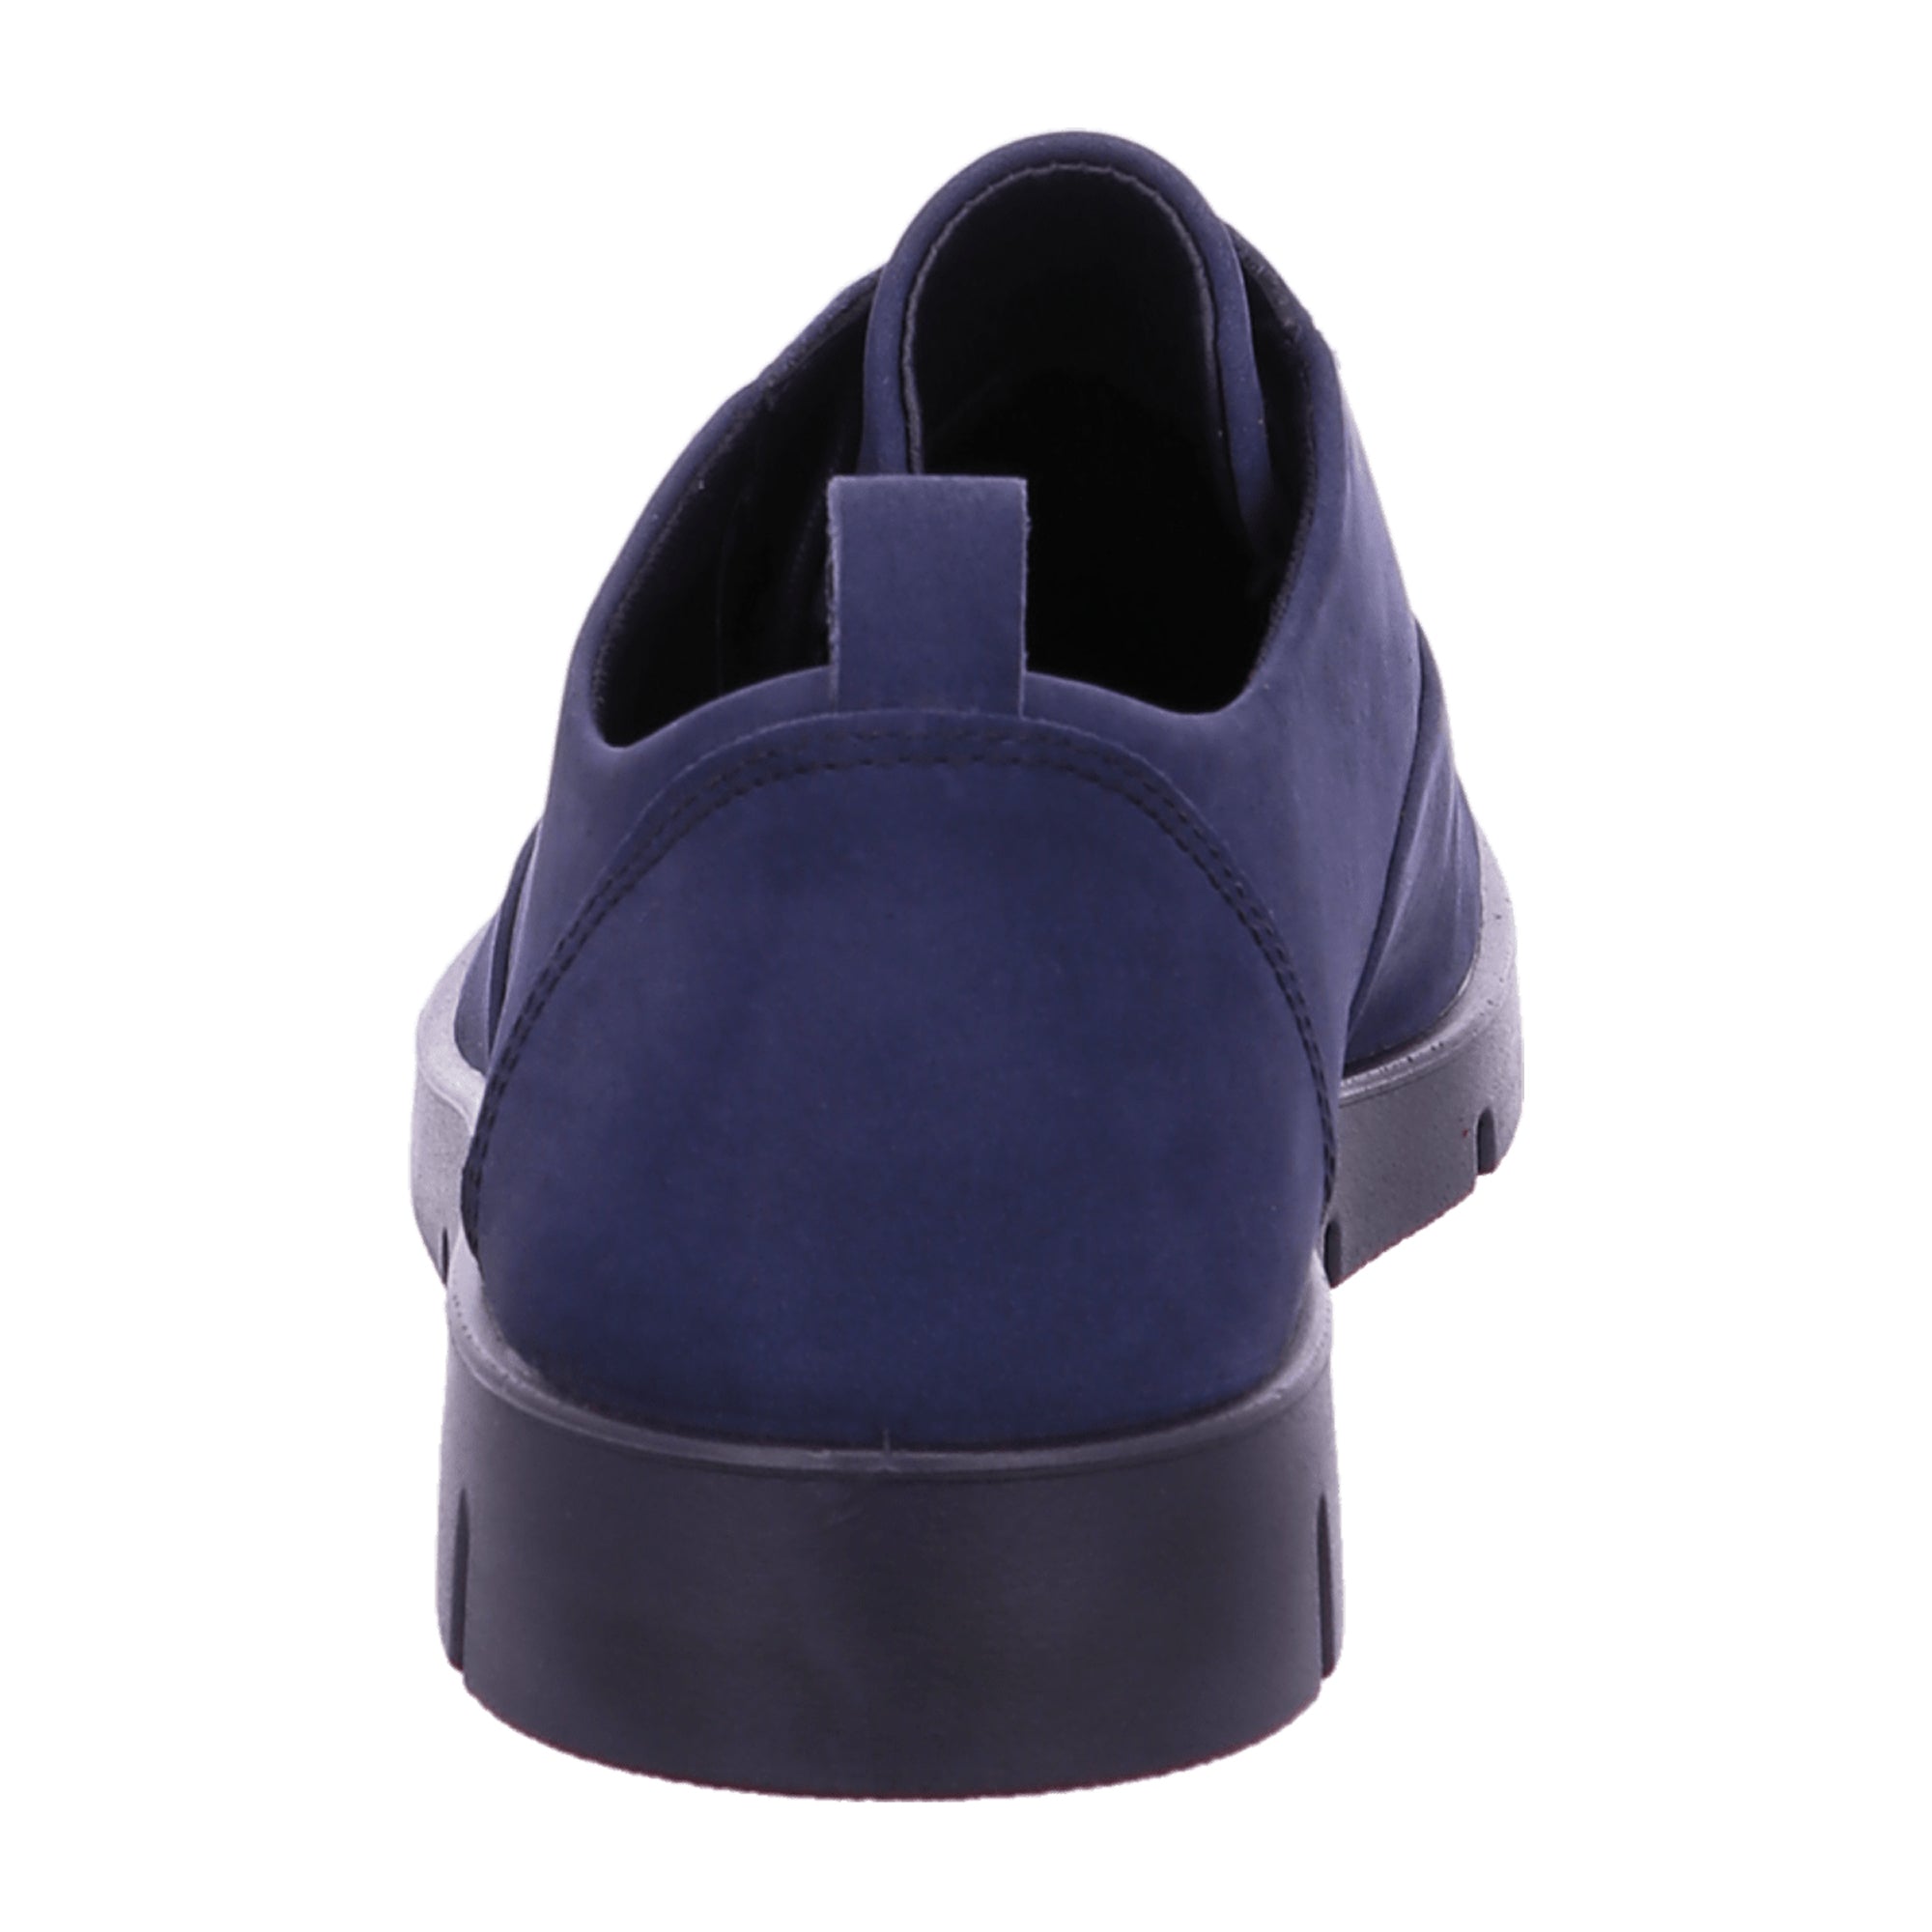 Ecco 282313 Women's Comfortable Blue Shoes - Fashionable & Durable